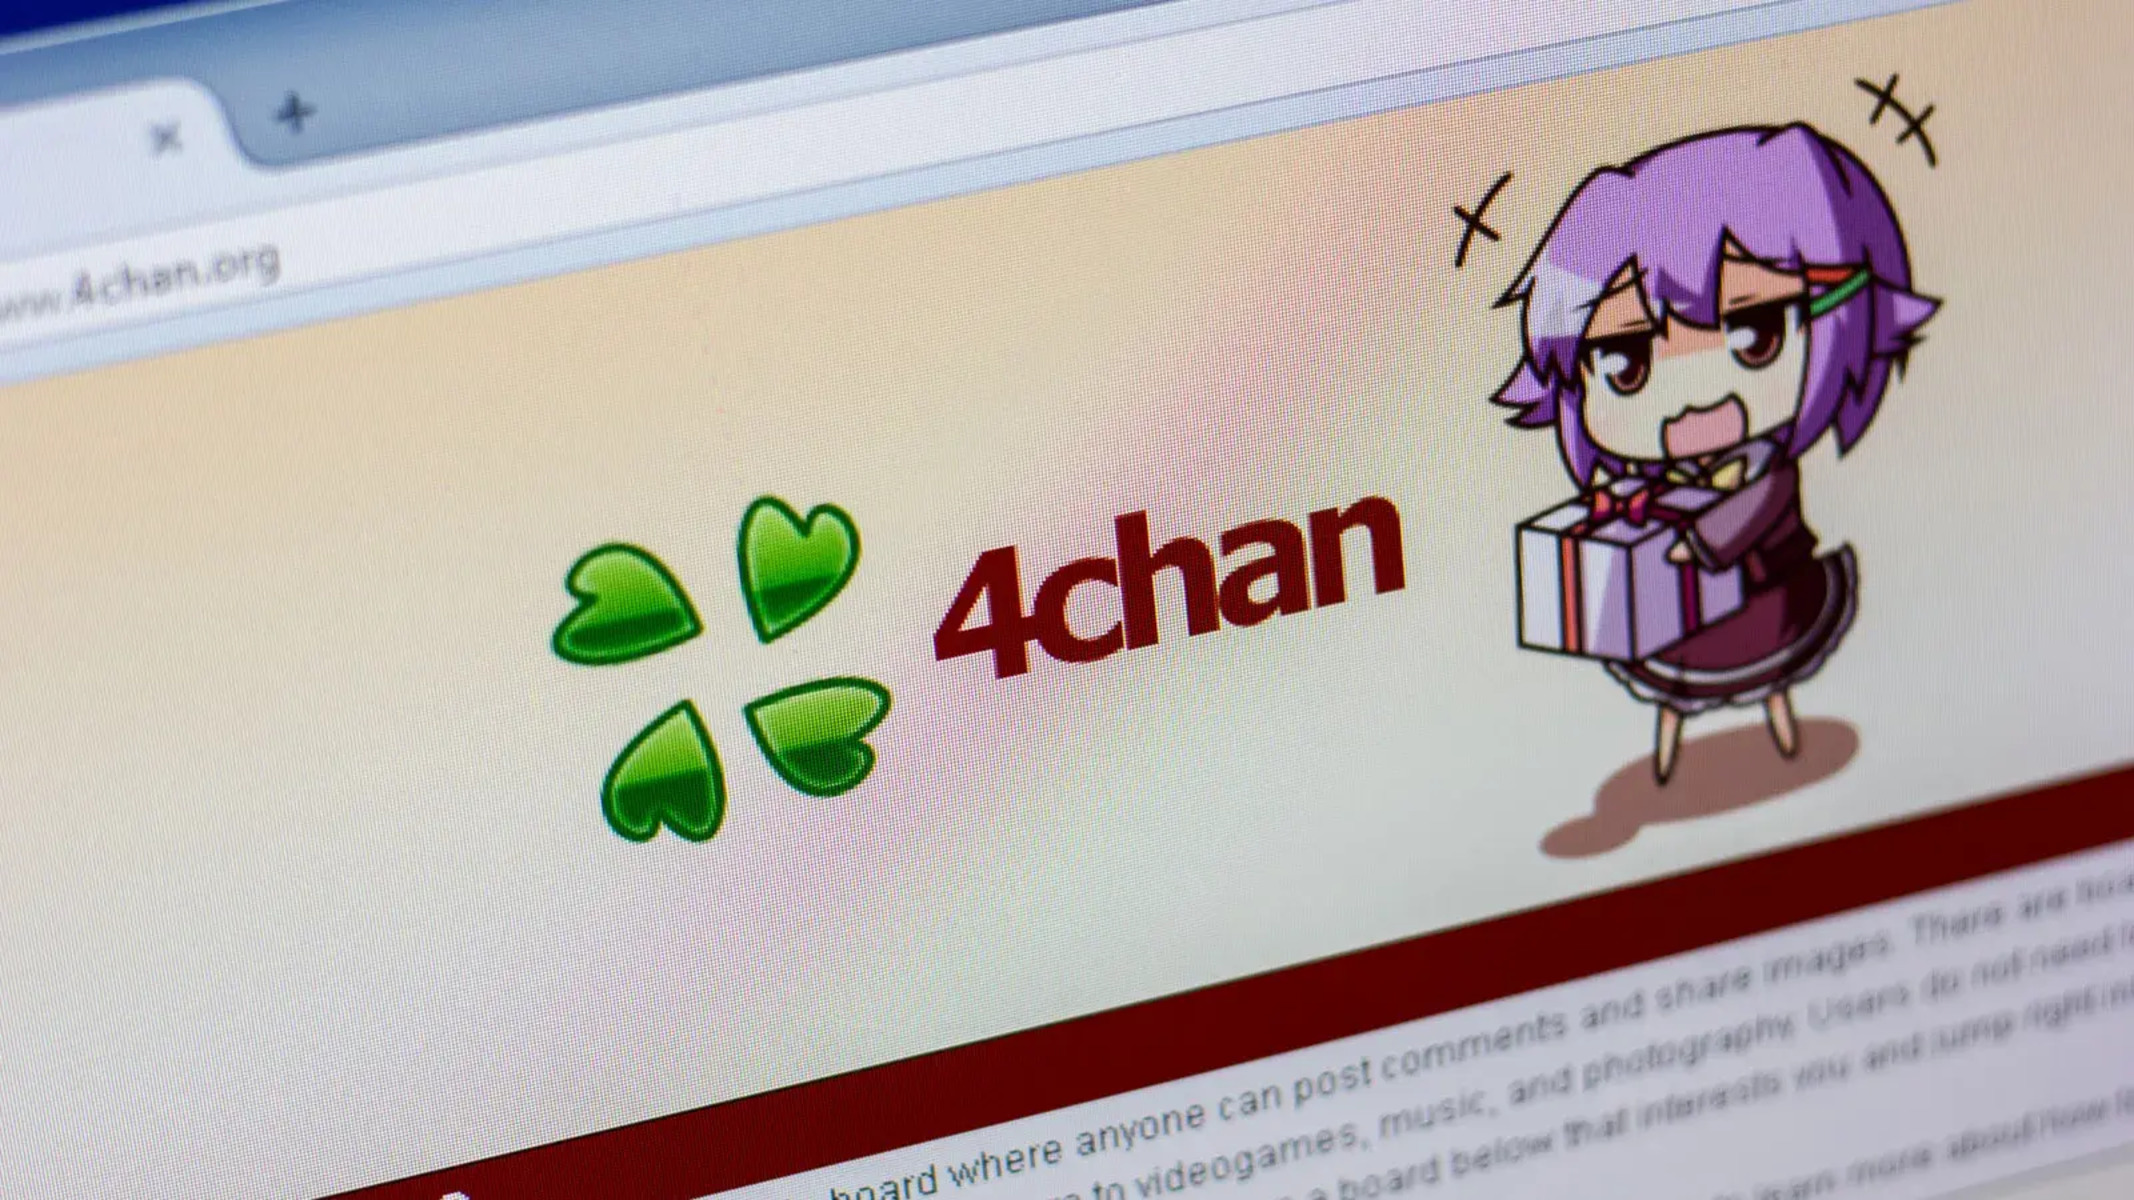 4chan website 1